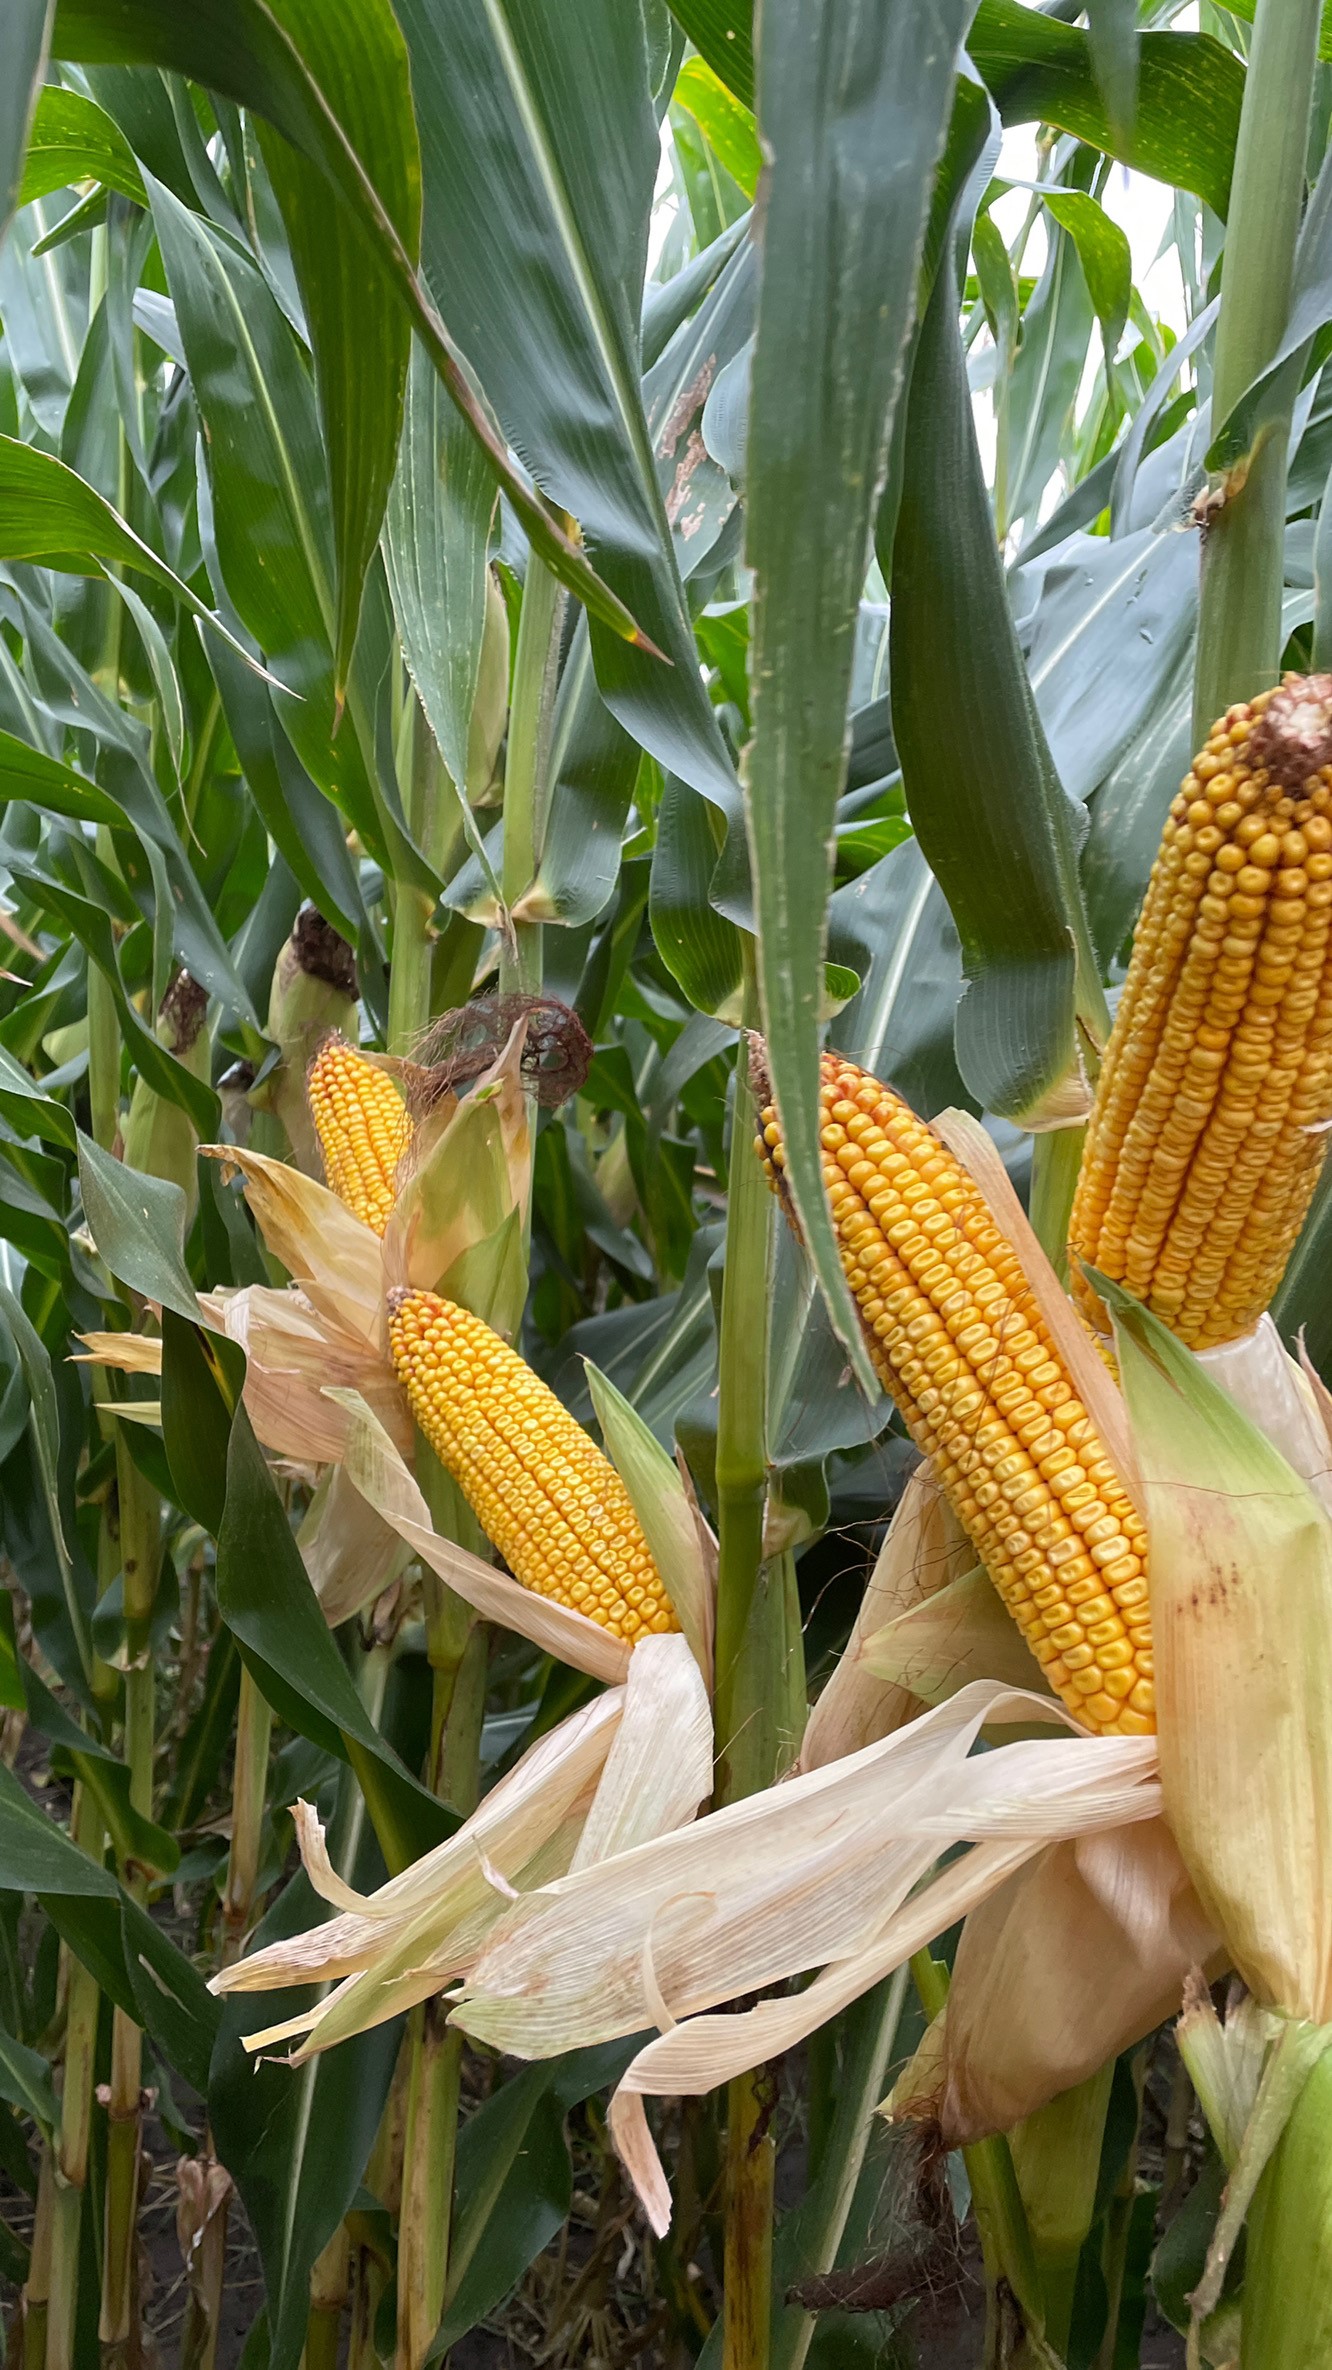 LCG52C42 corn with good stalk health